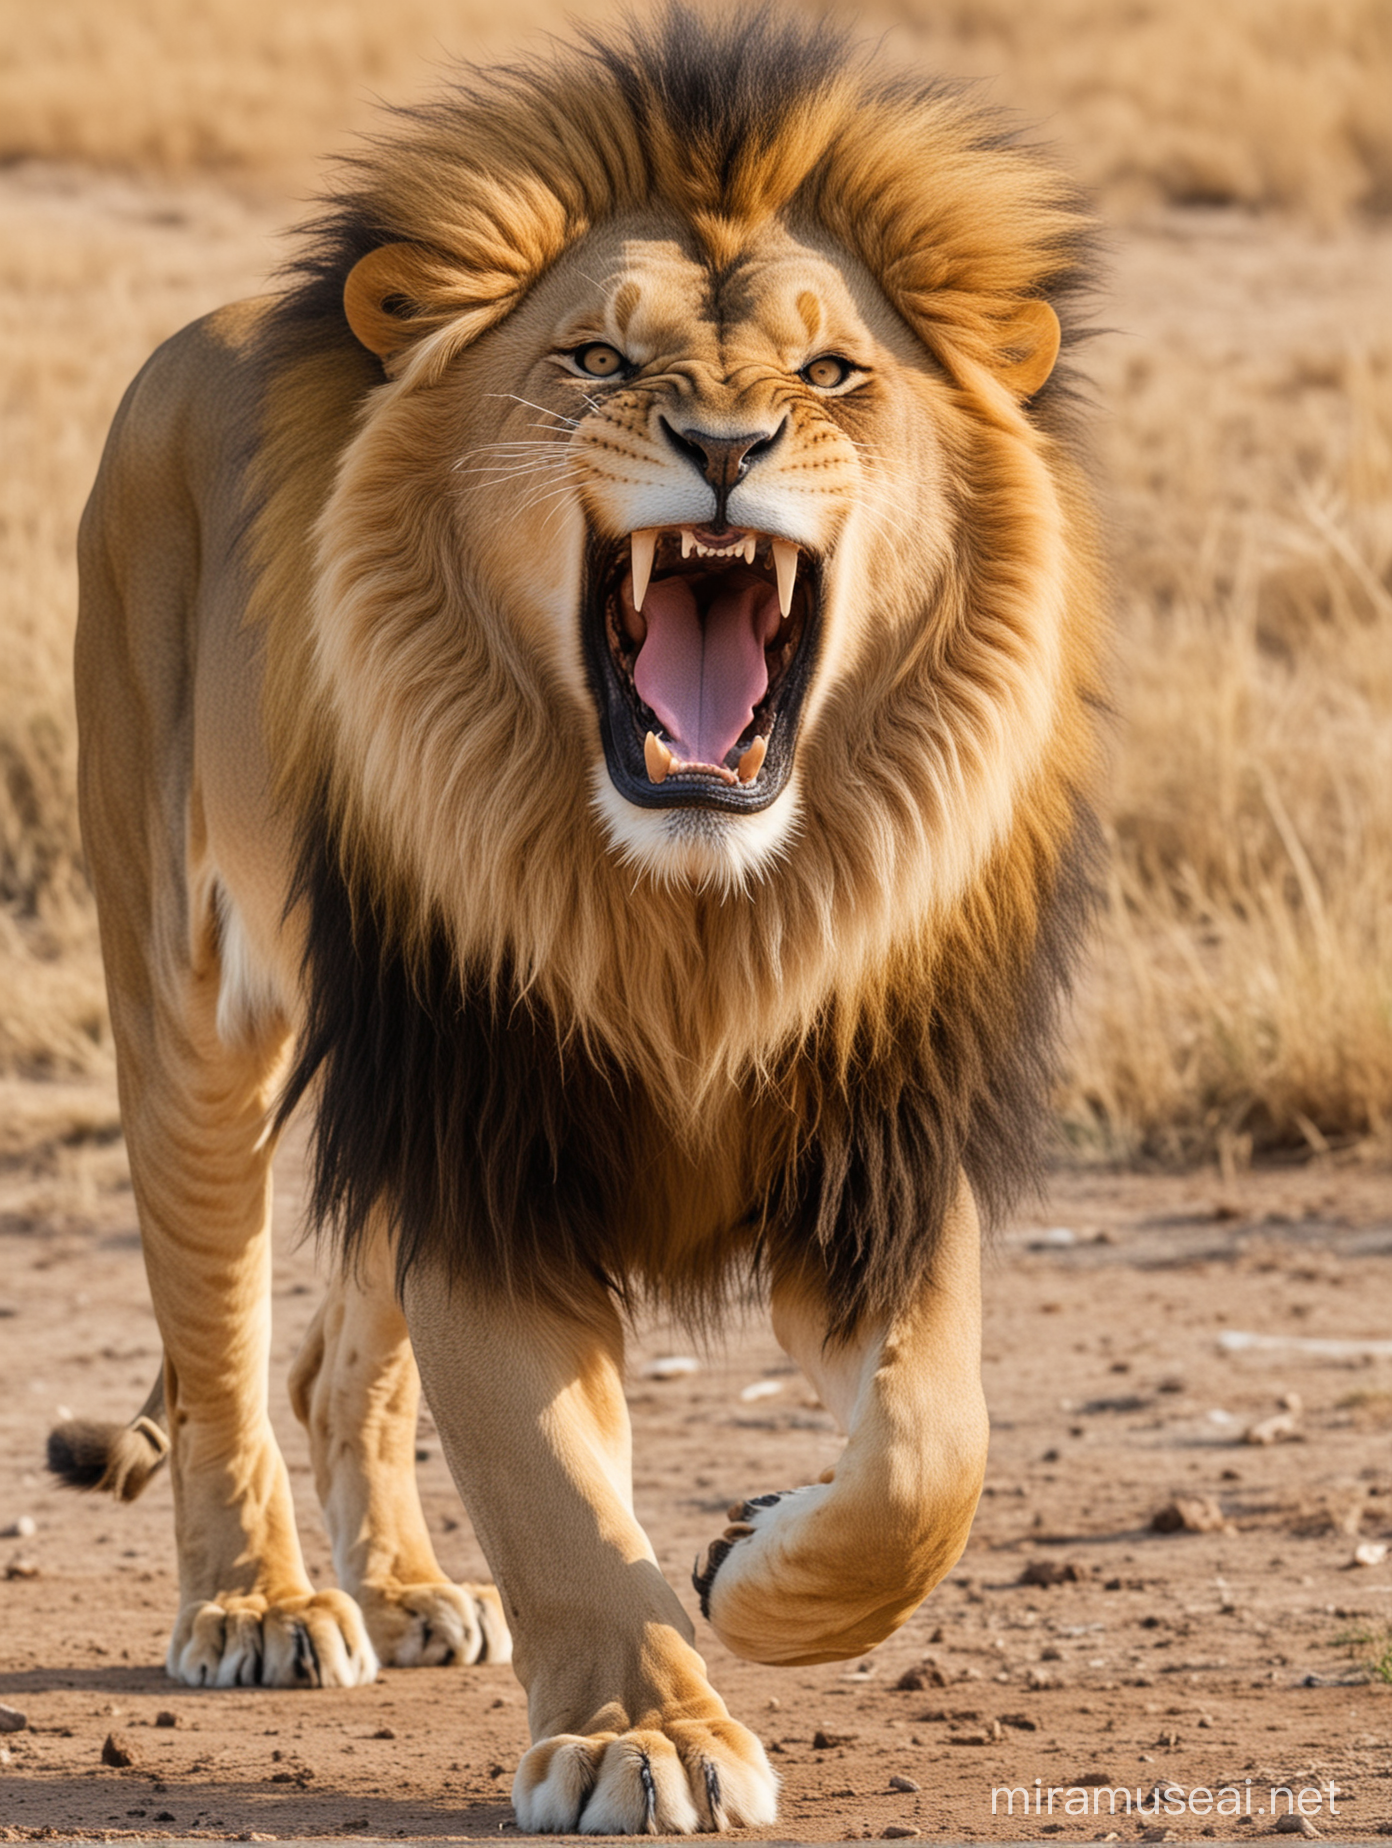 Majestic Lion Roaring in the Wilderness